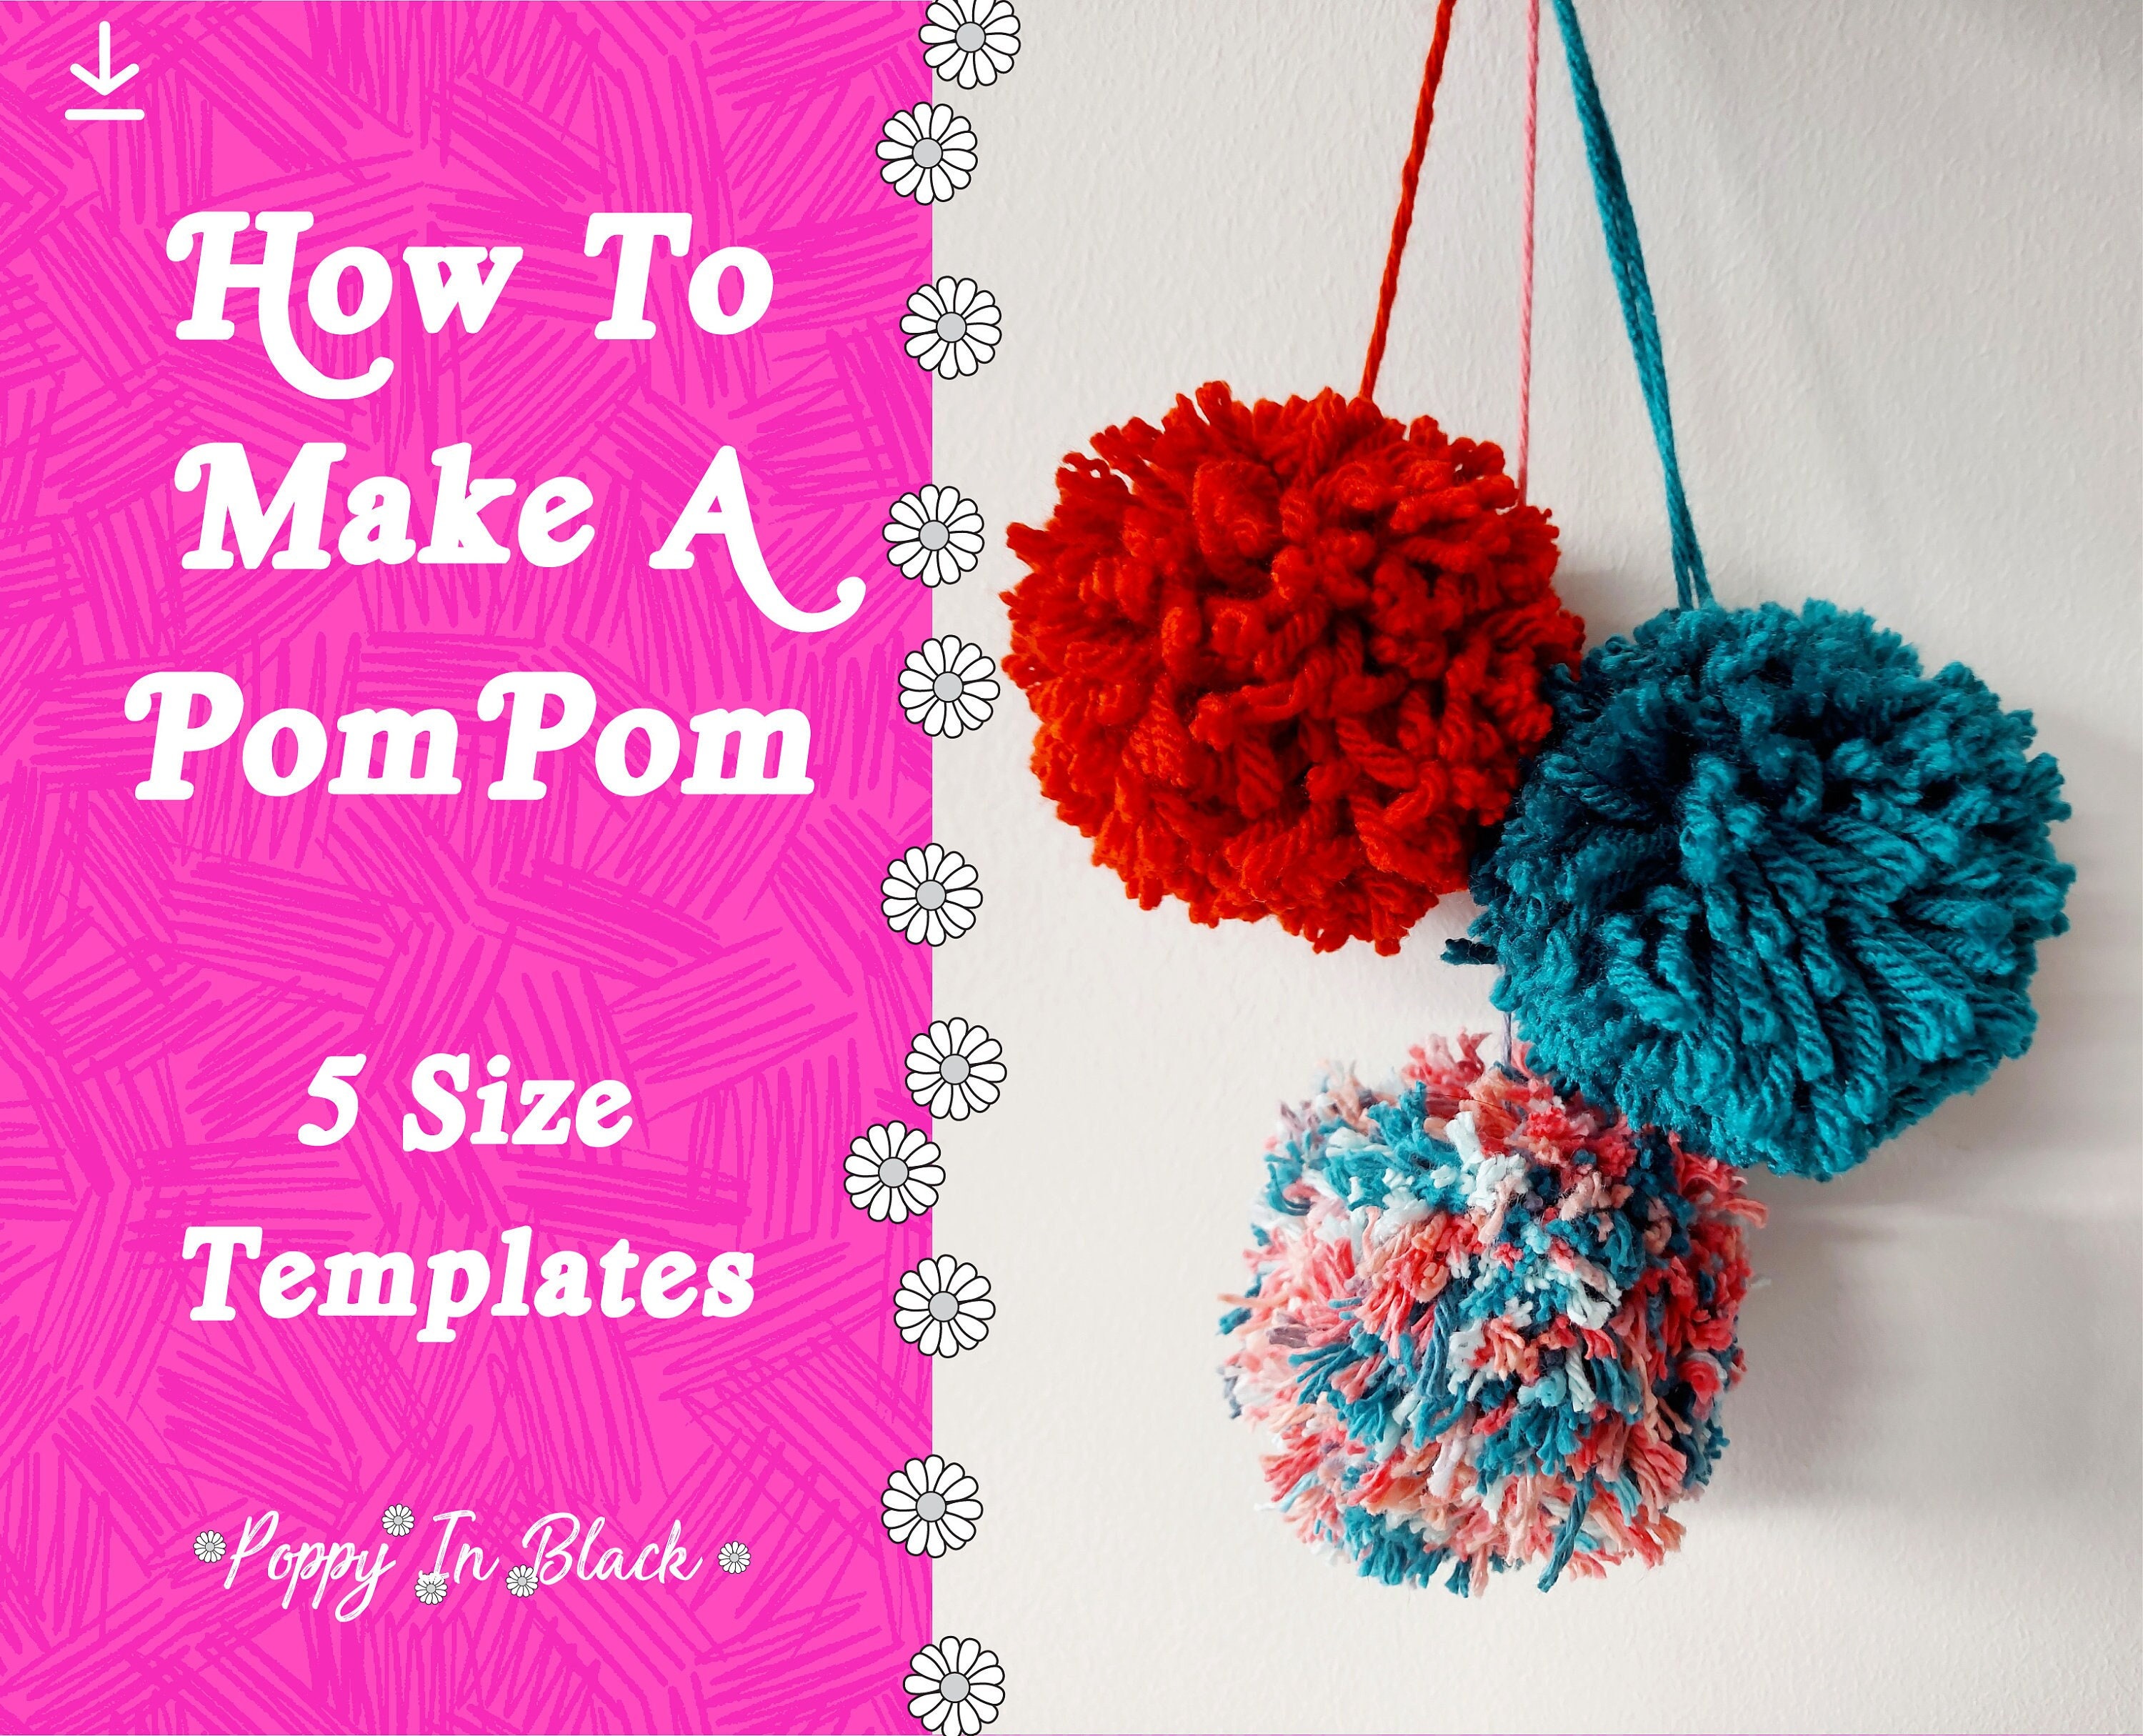 Pom Pom Maker, Wood & 5-in-1 Tool, Makes Multiple Size Pom Poms